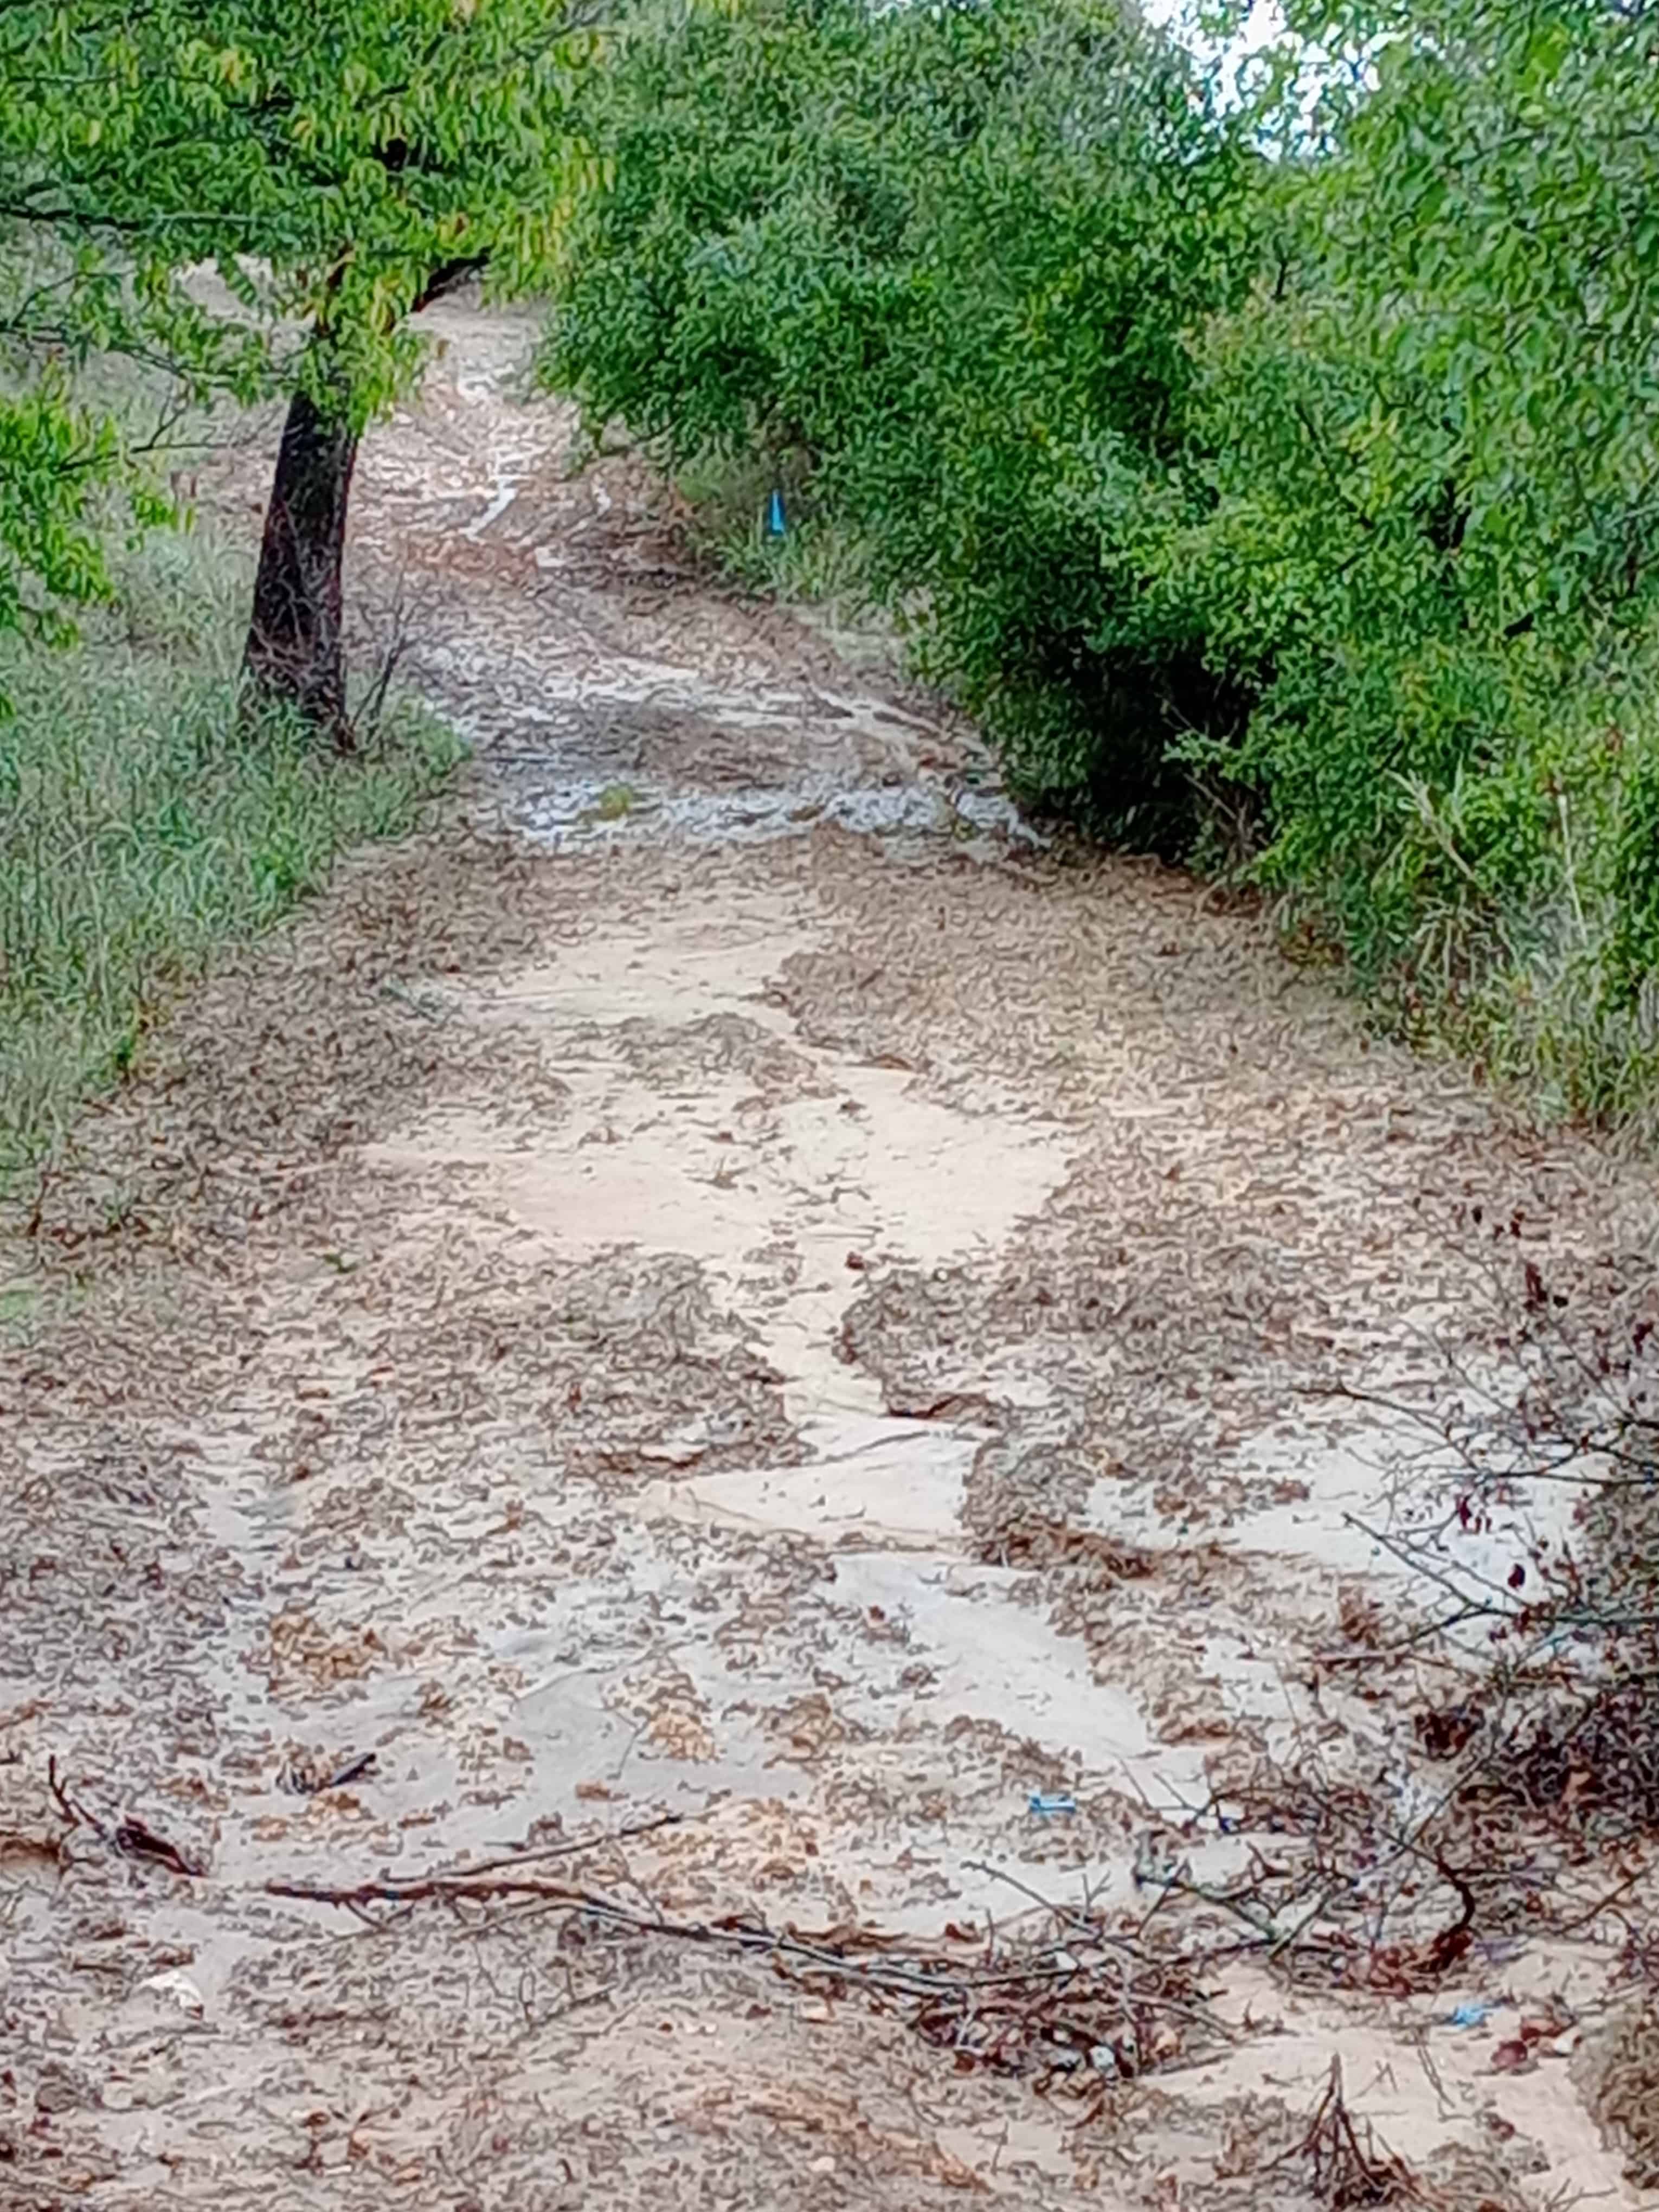 Photograph of a muddy trail at LBJ National Grasslands